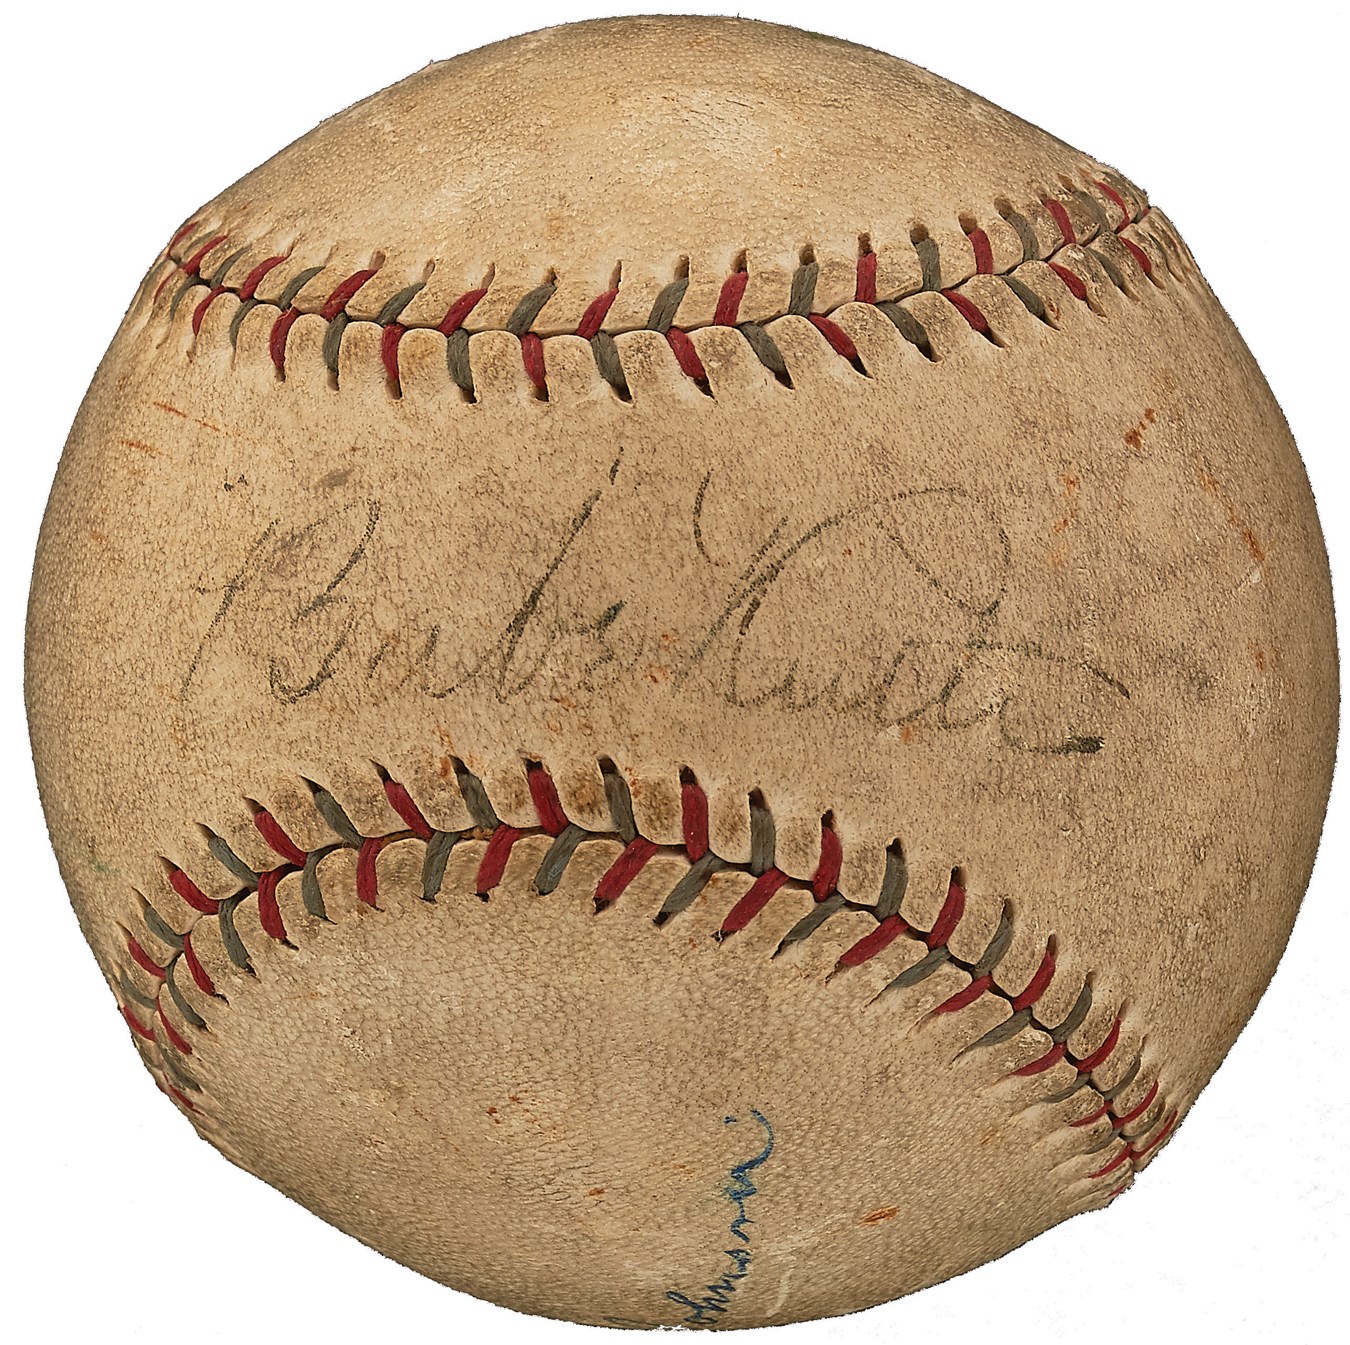 1926-27 Babe Ruth Single-Signed Official American League Ban Johnson Baseball (PSA)